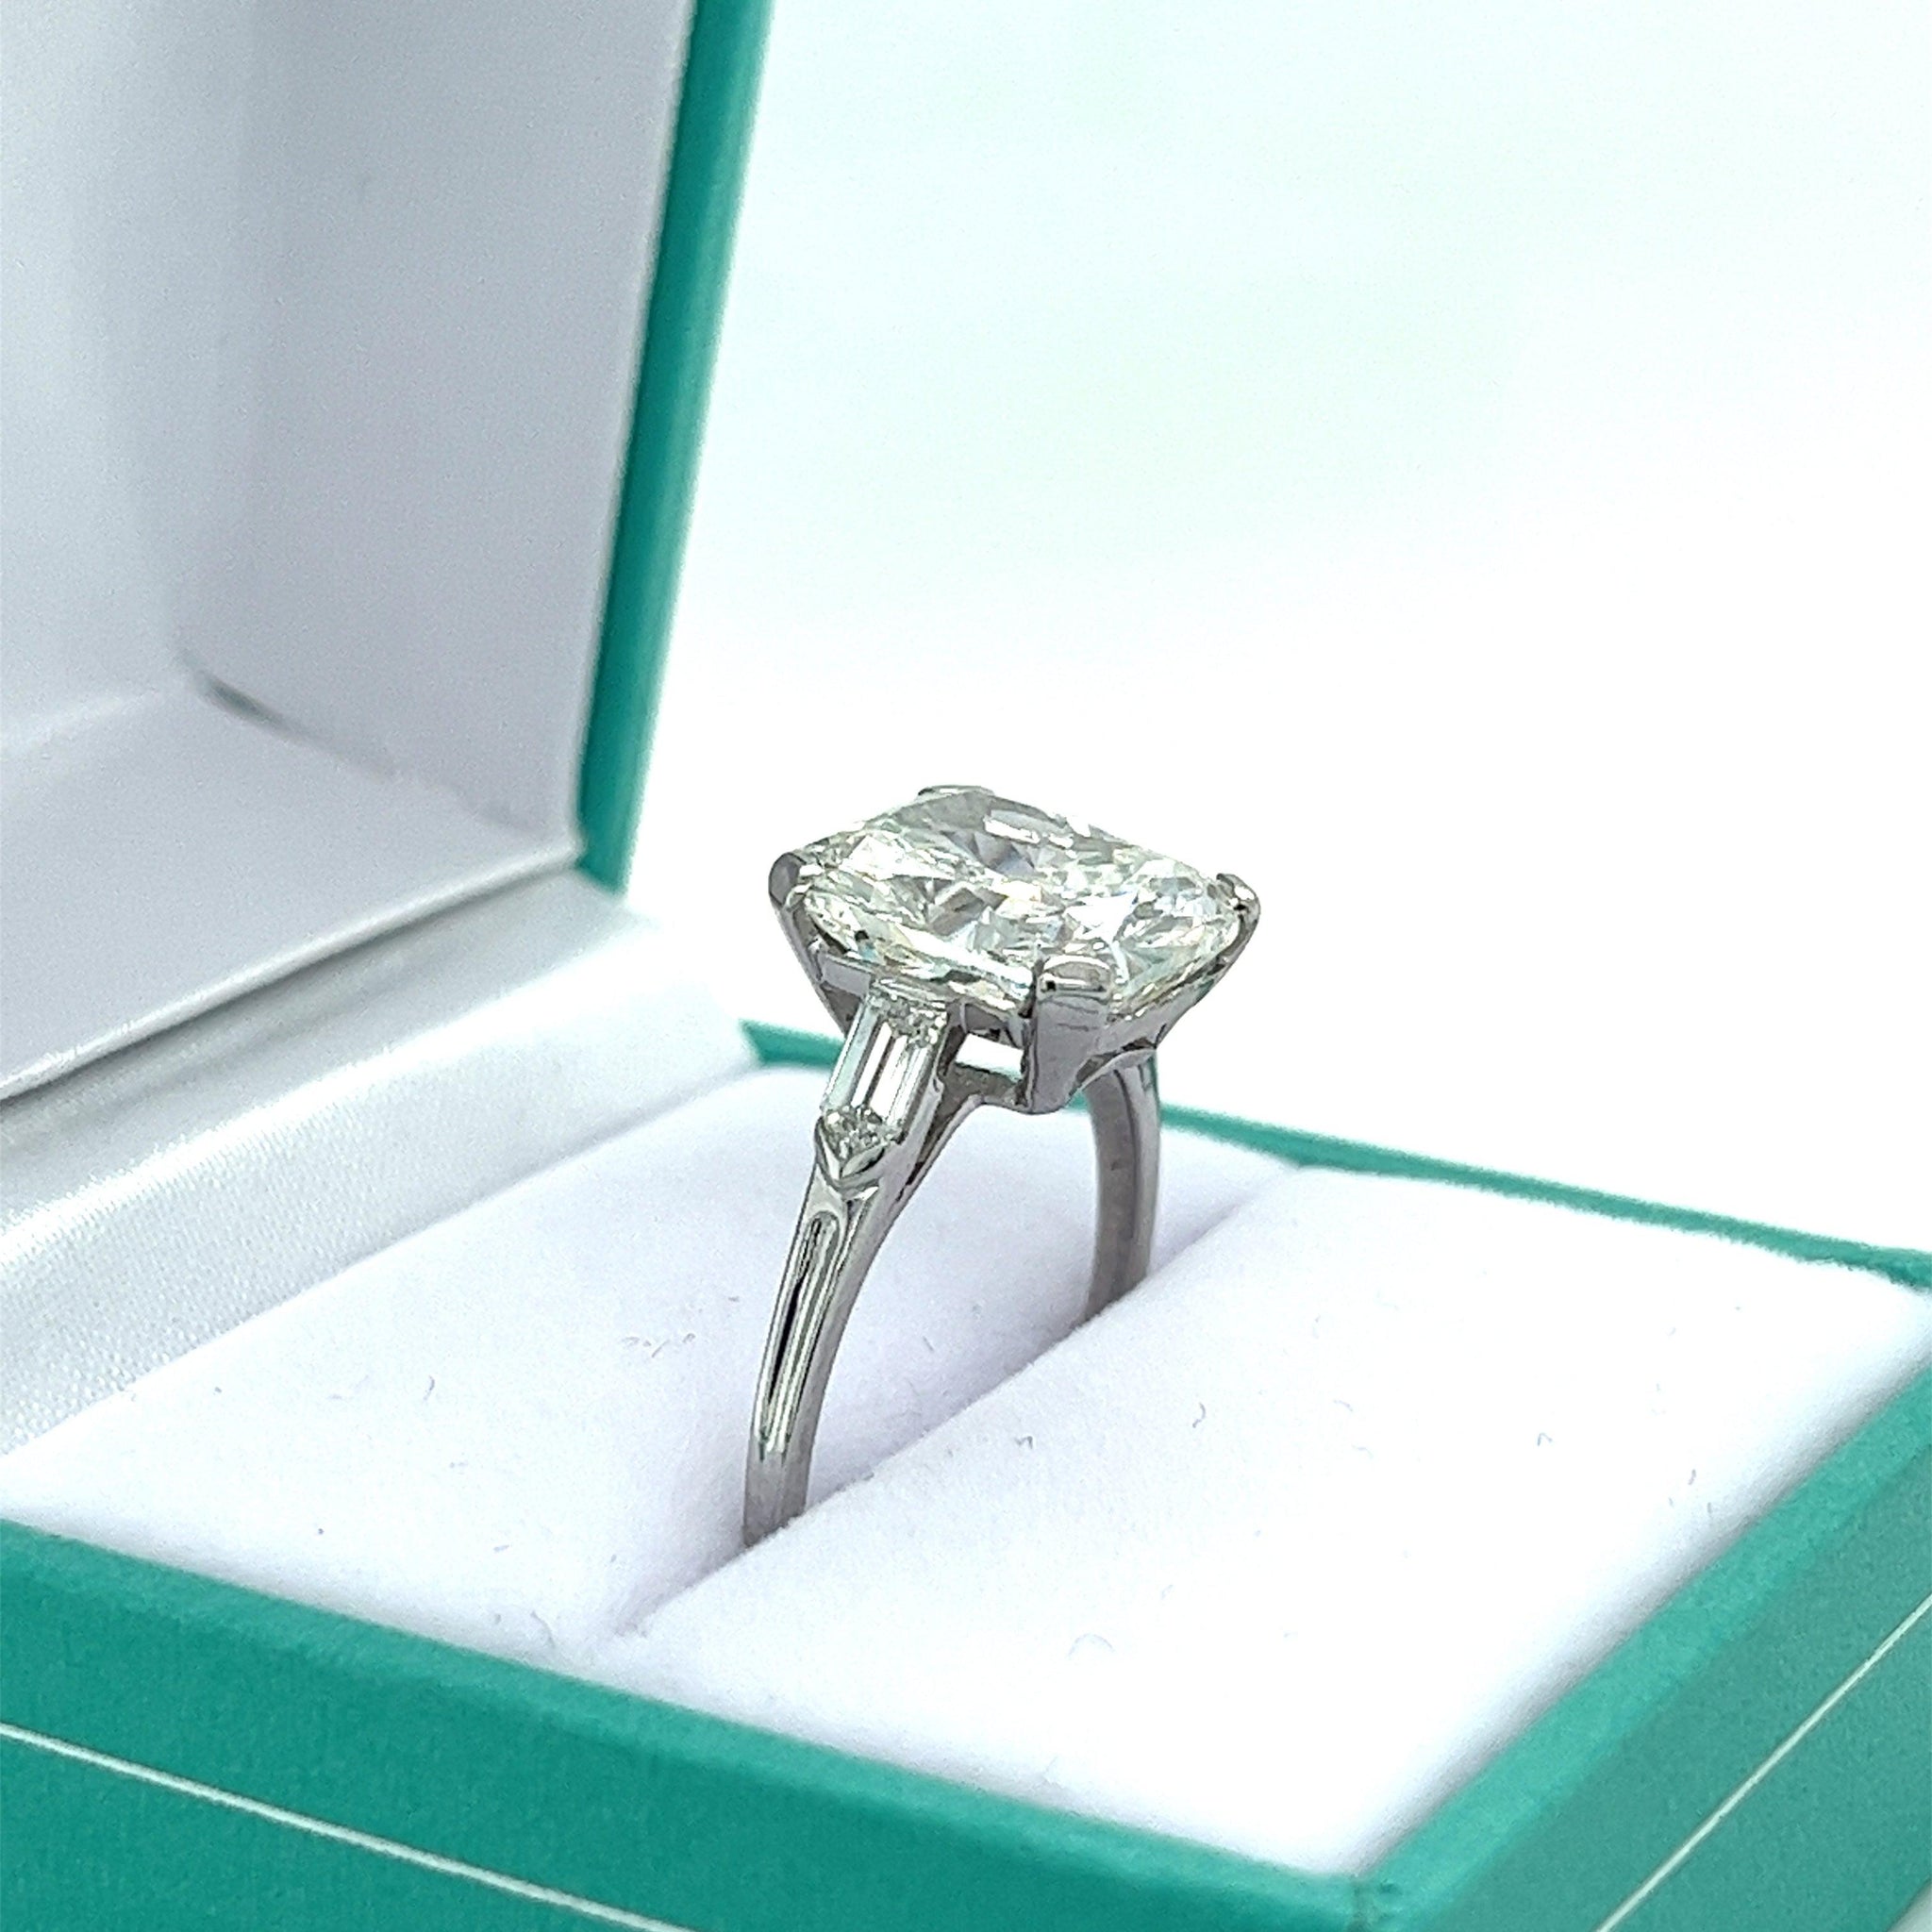 Lola 5ct Radiant Cut Diamond Ring | Nekta New York